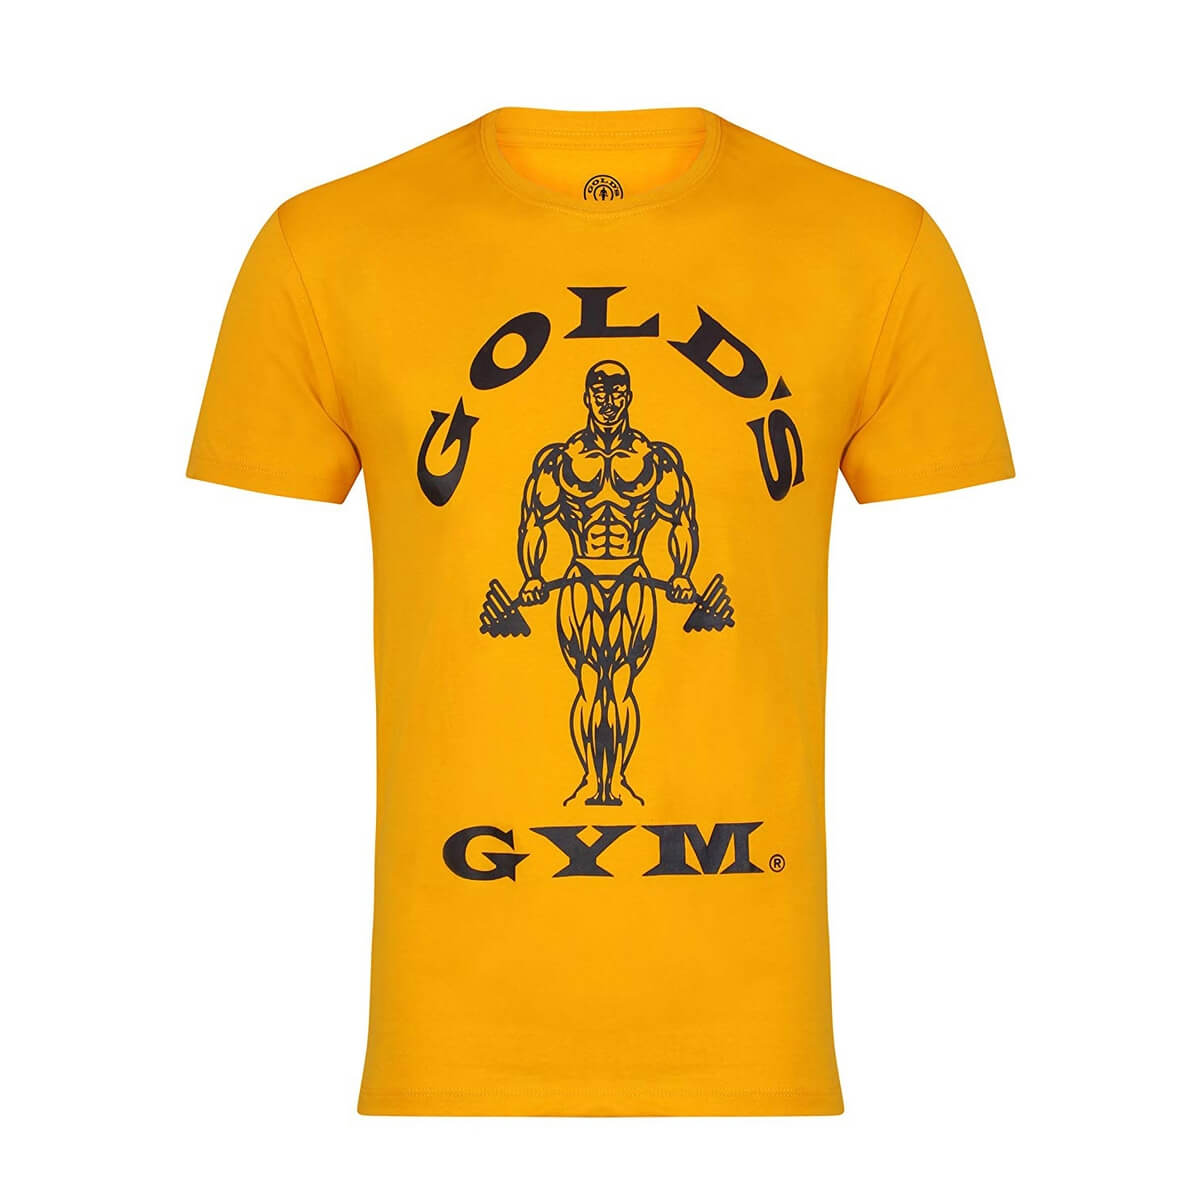 Muscle Joe T-Shirt, gold, Gold's Gym